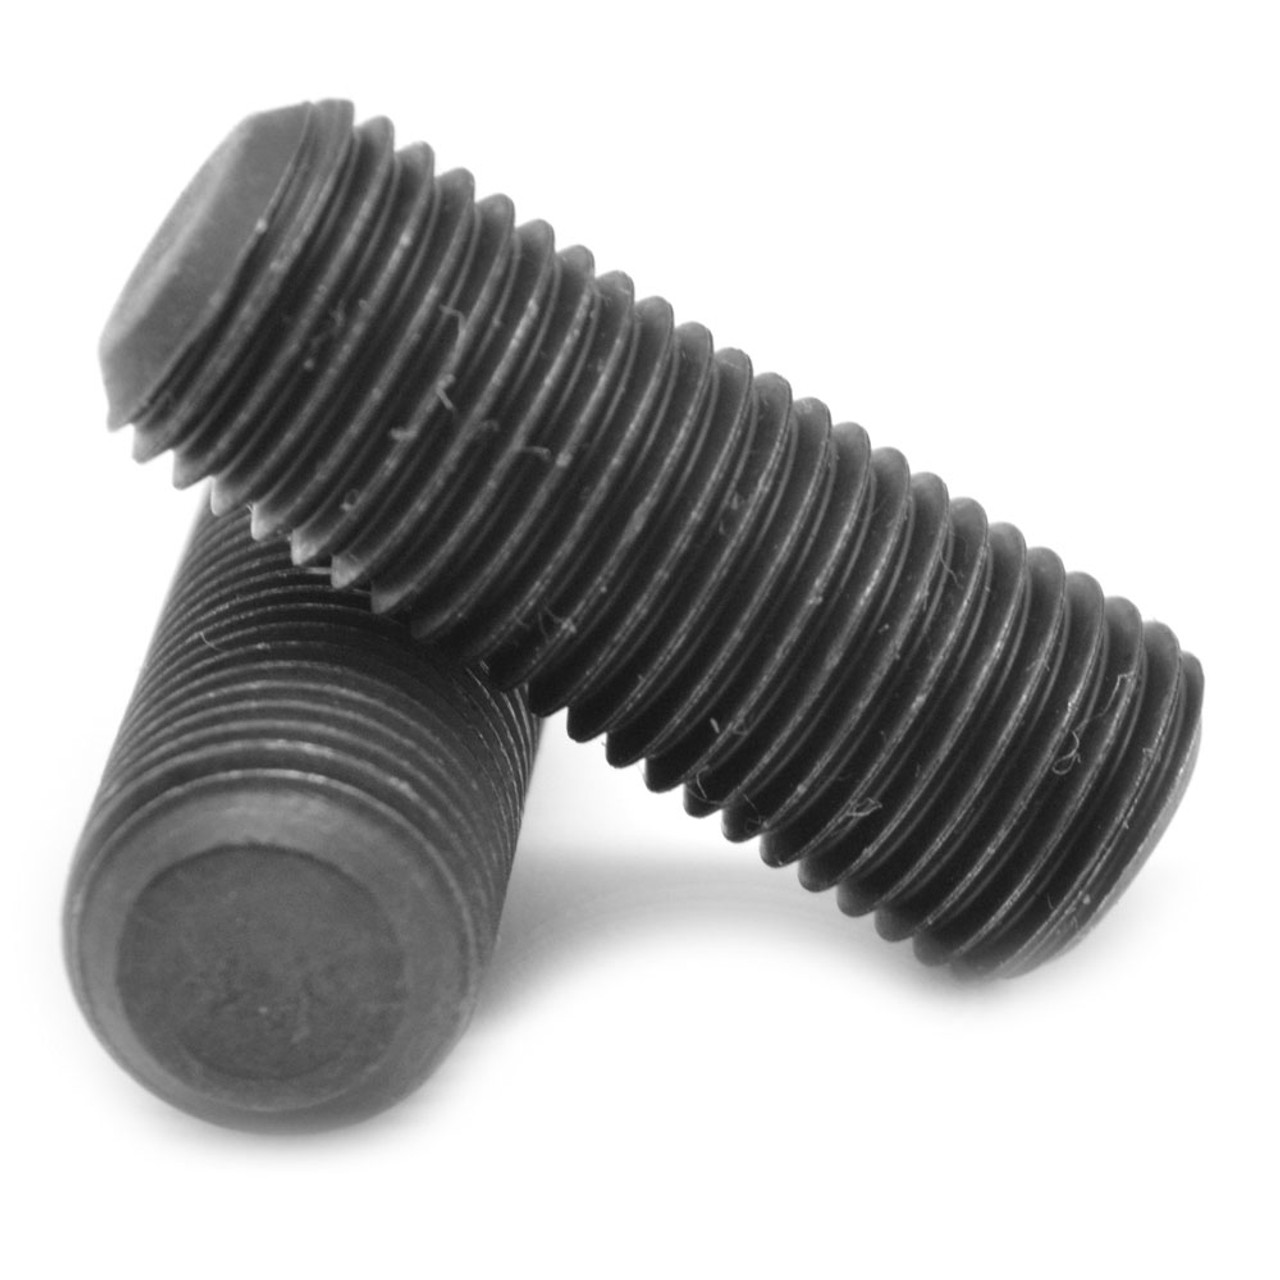 #4-40 x 3/32" Coarse Thread Socket Set Screw Flat Point Alloy Steel Black Oxide